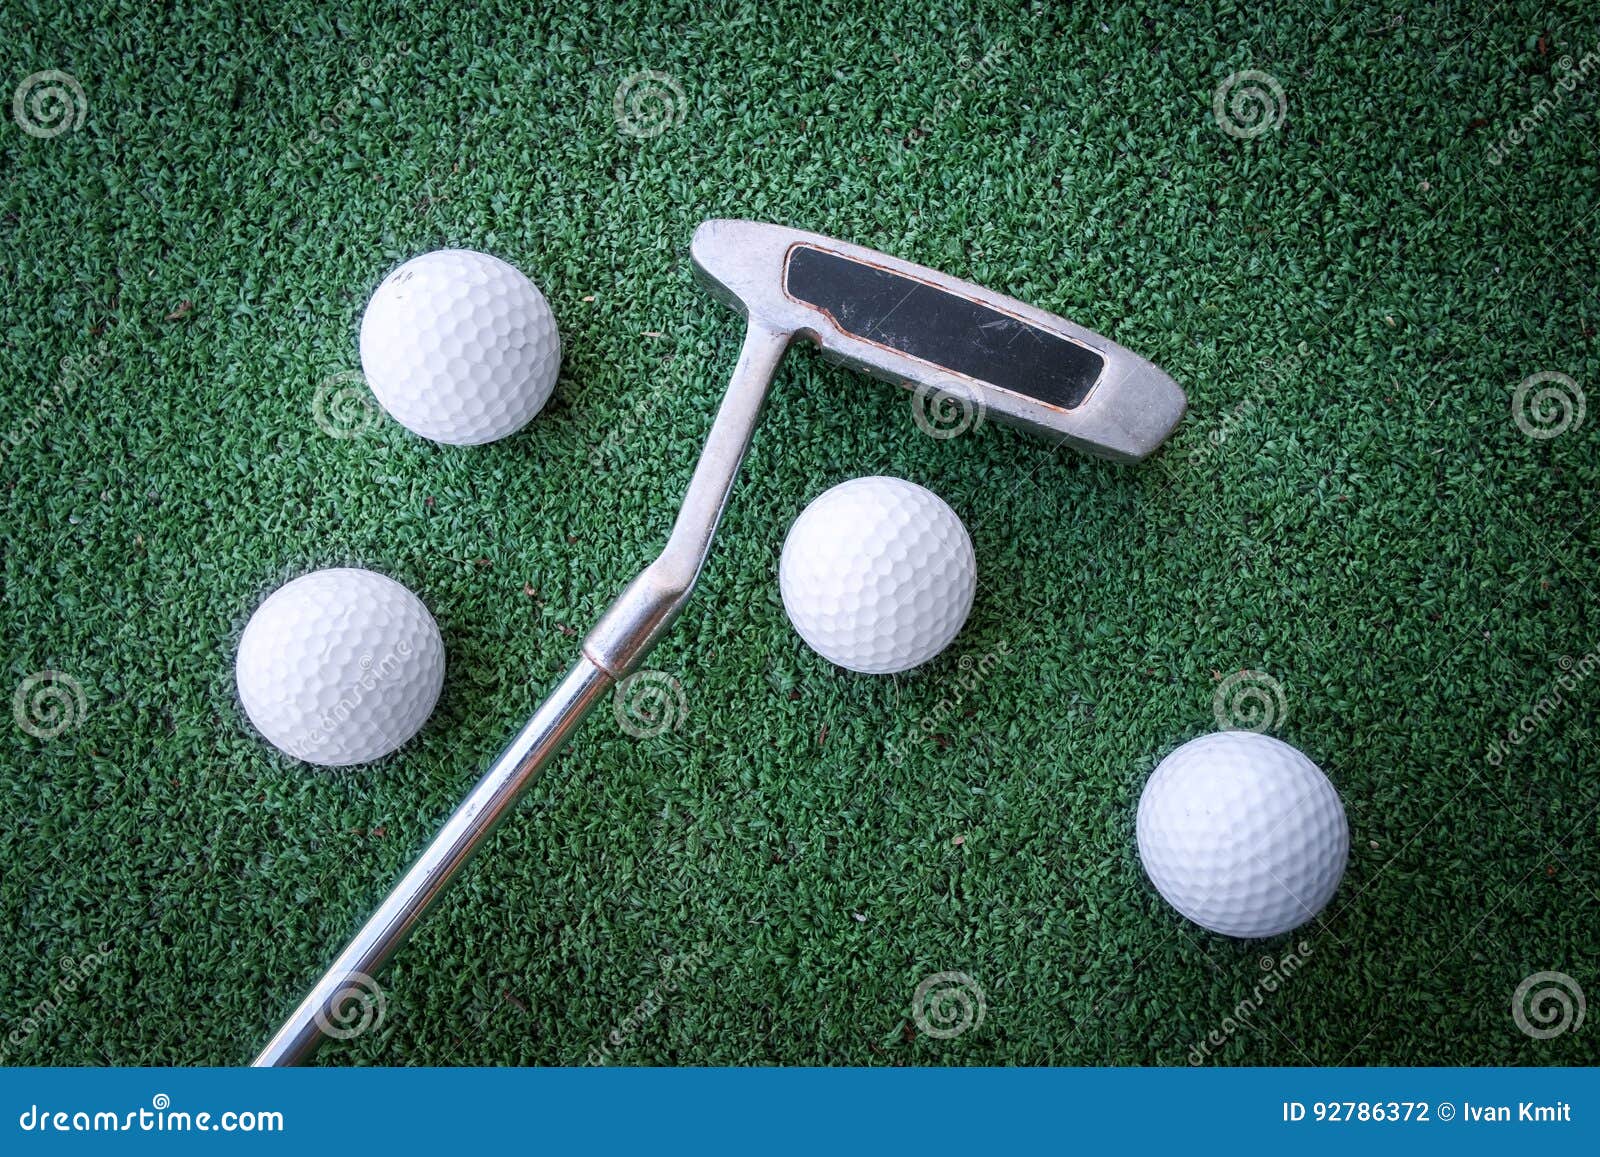 mini golf scene with ball and club